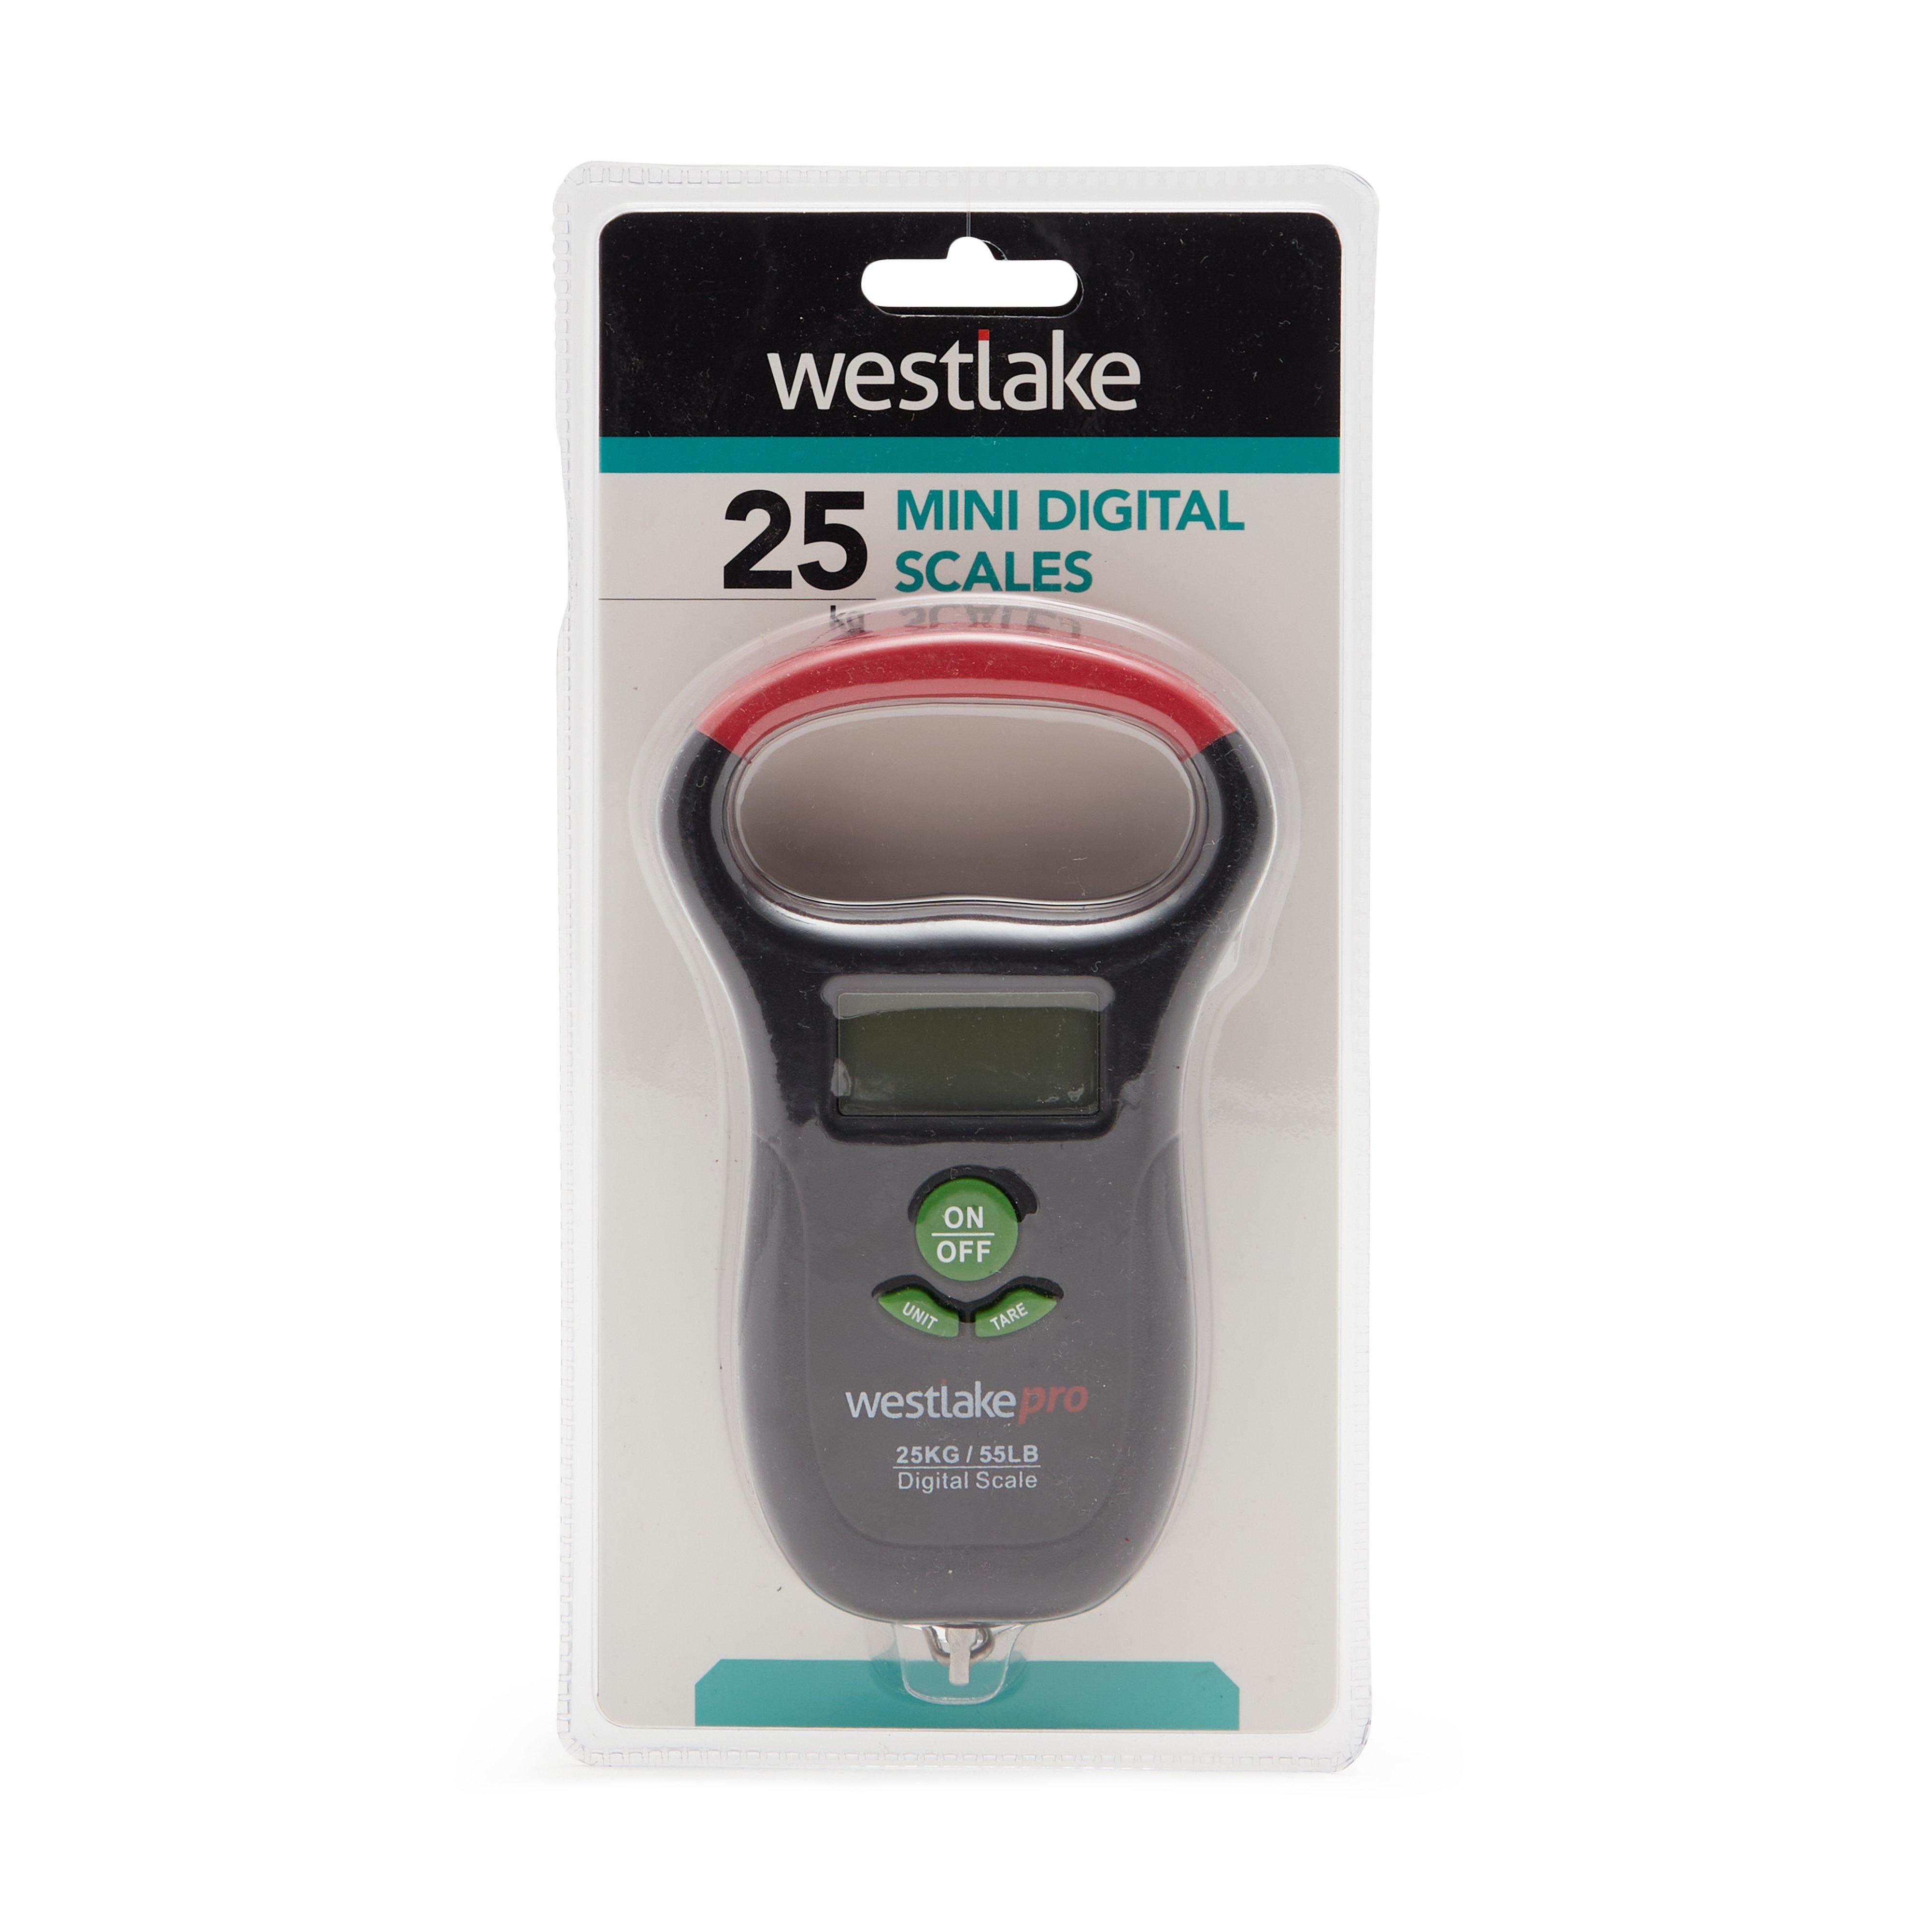 Westlake 25kg Mini Digital Scale Review